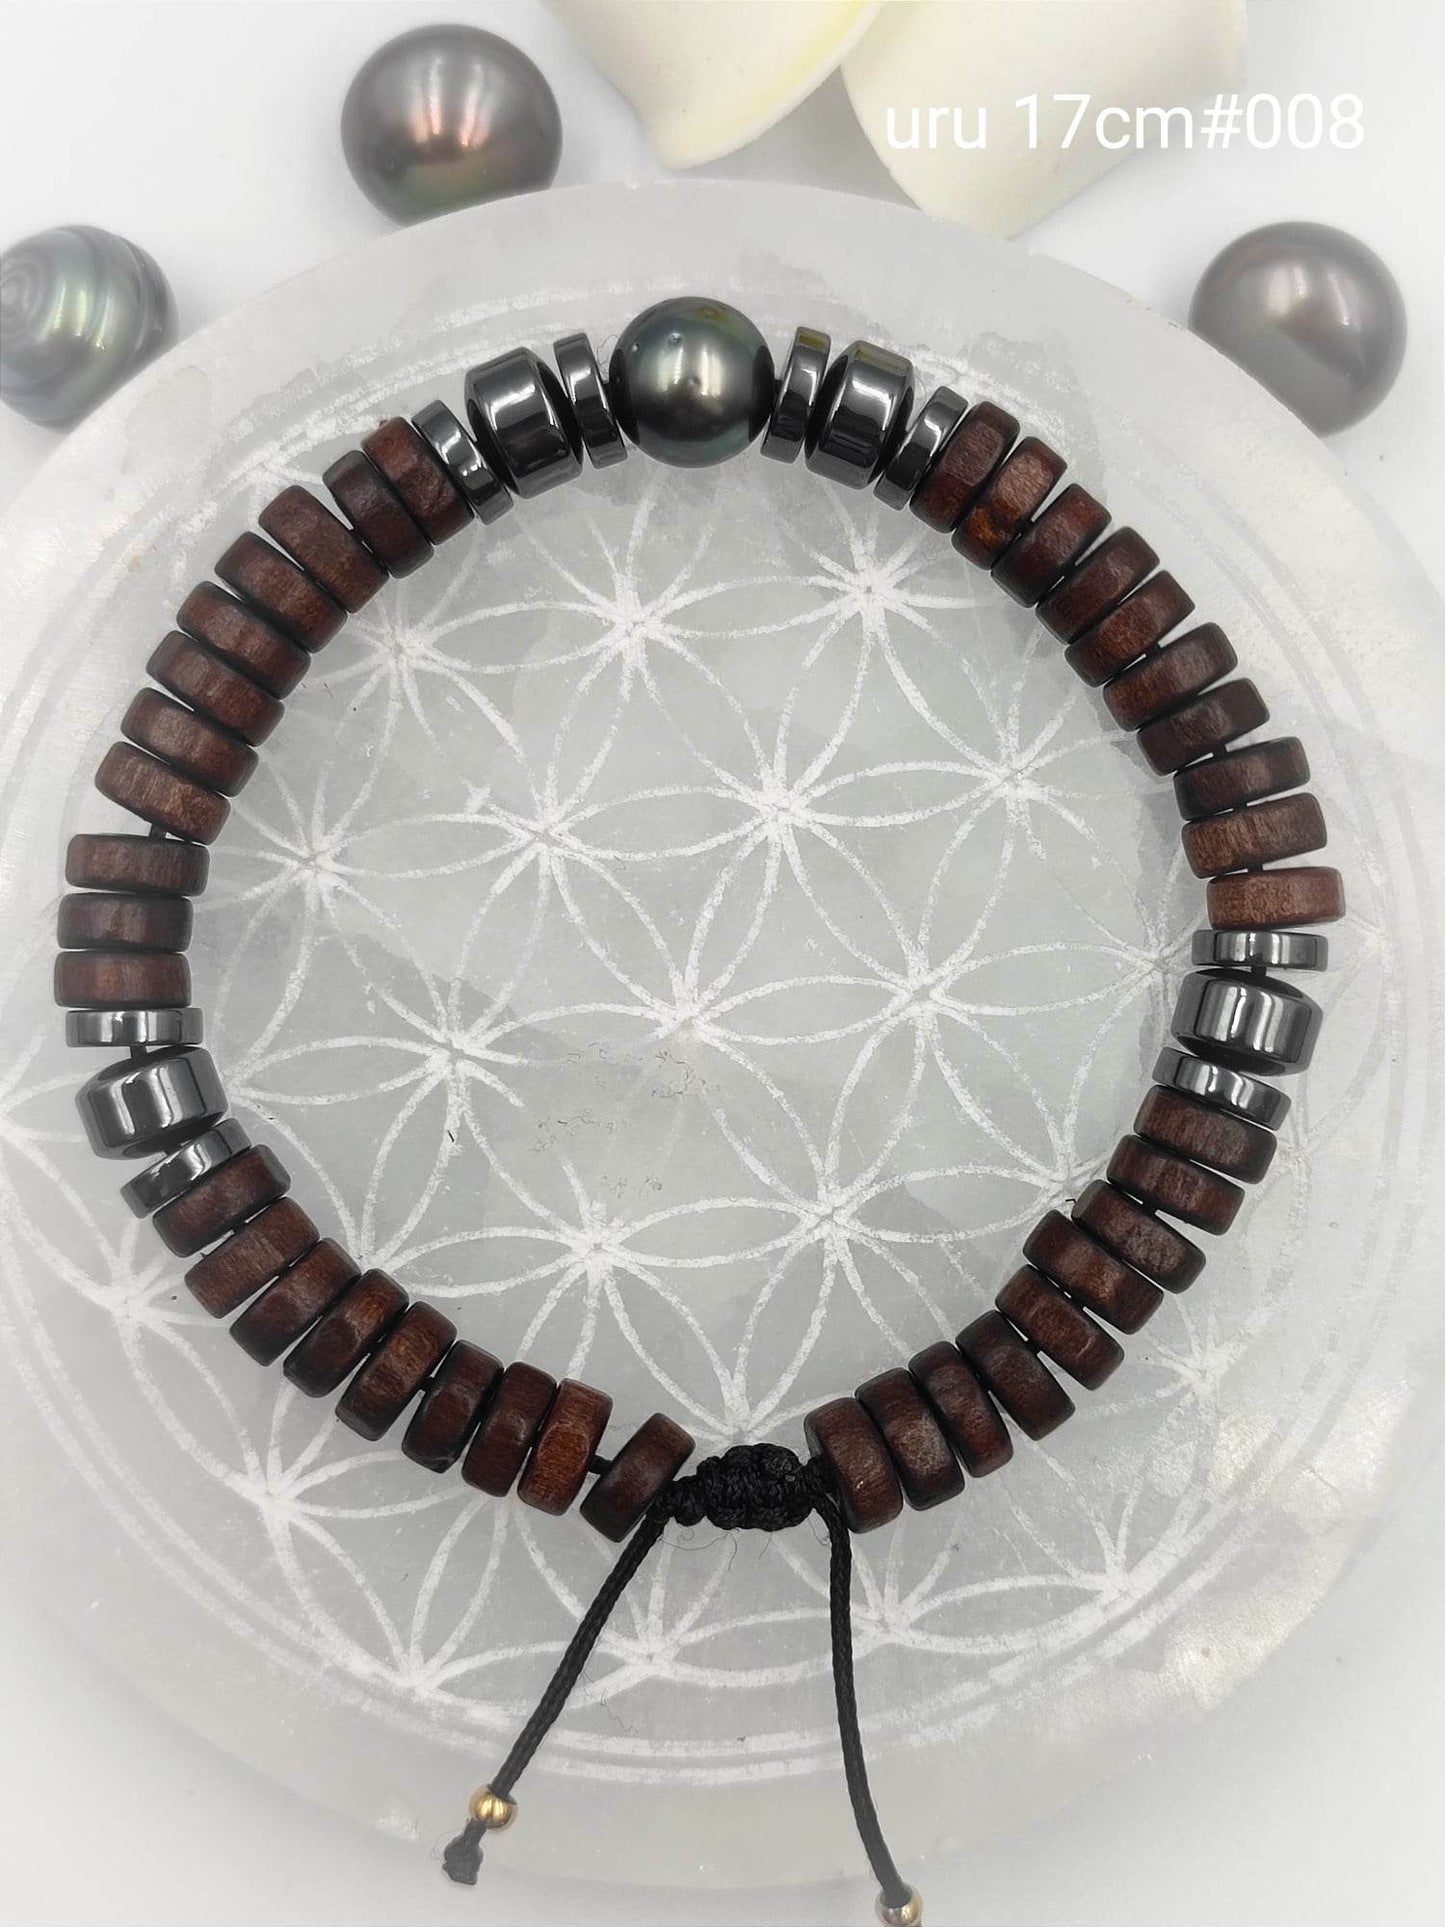 Bracelet homme "'Uru" Perle de Tahiti 17cm #008